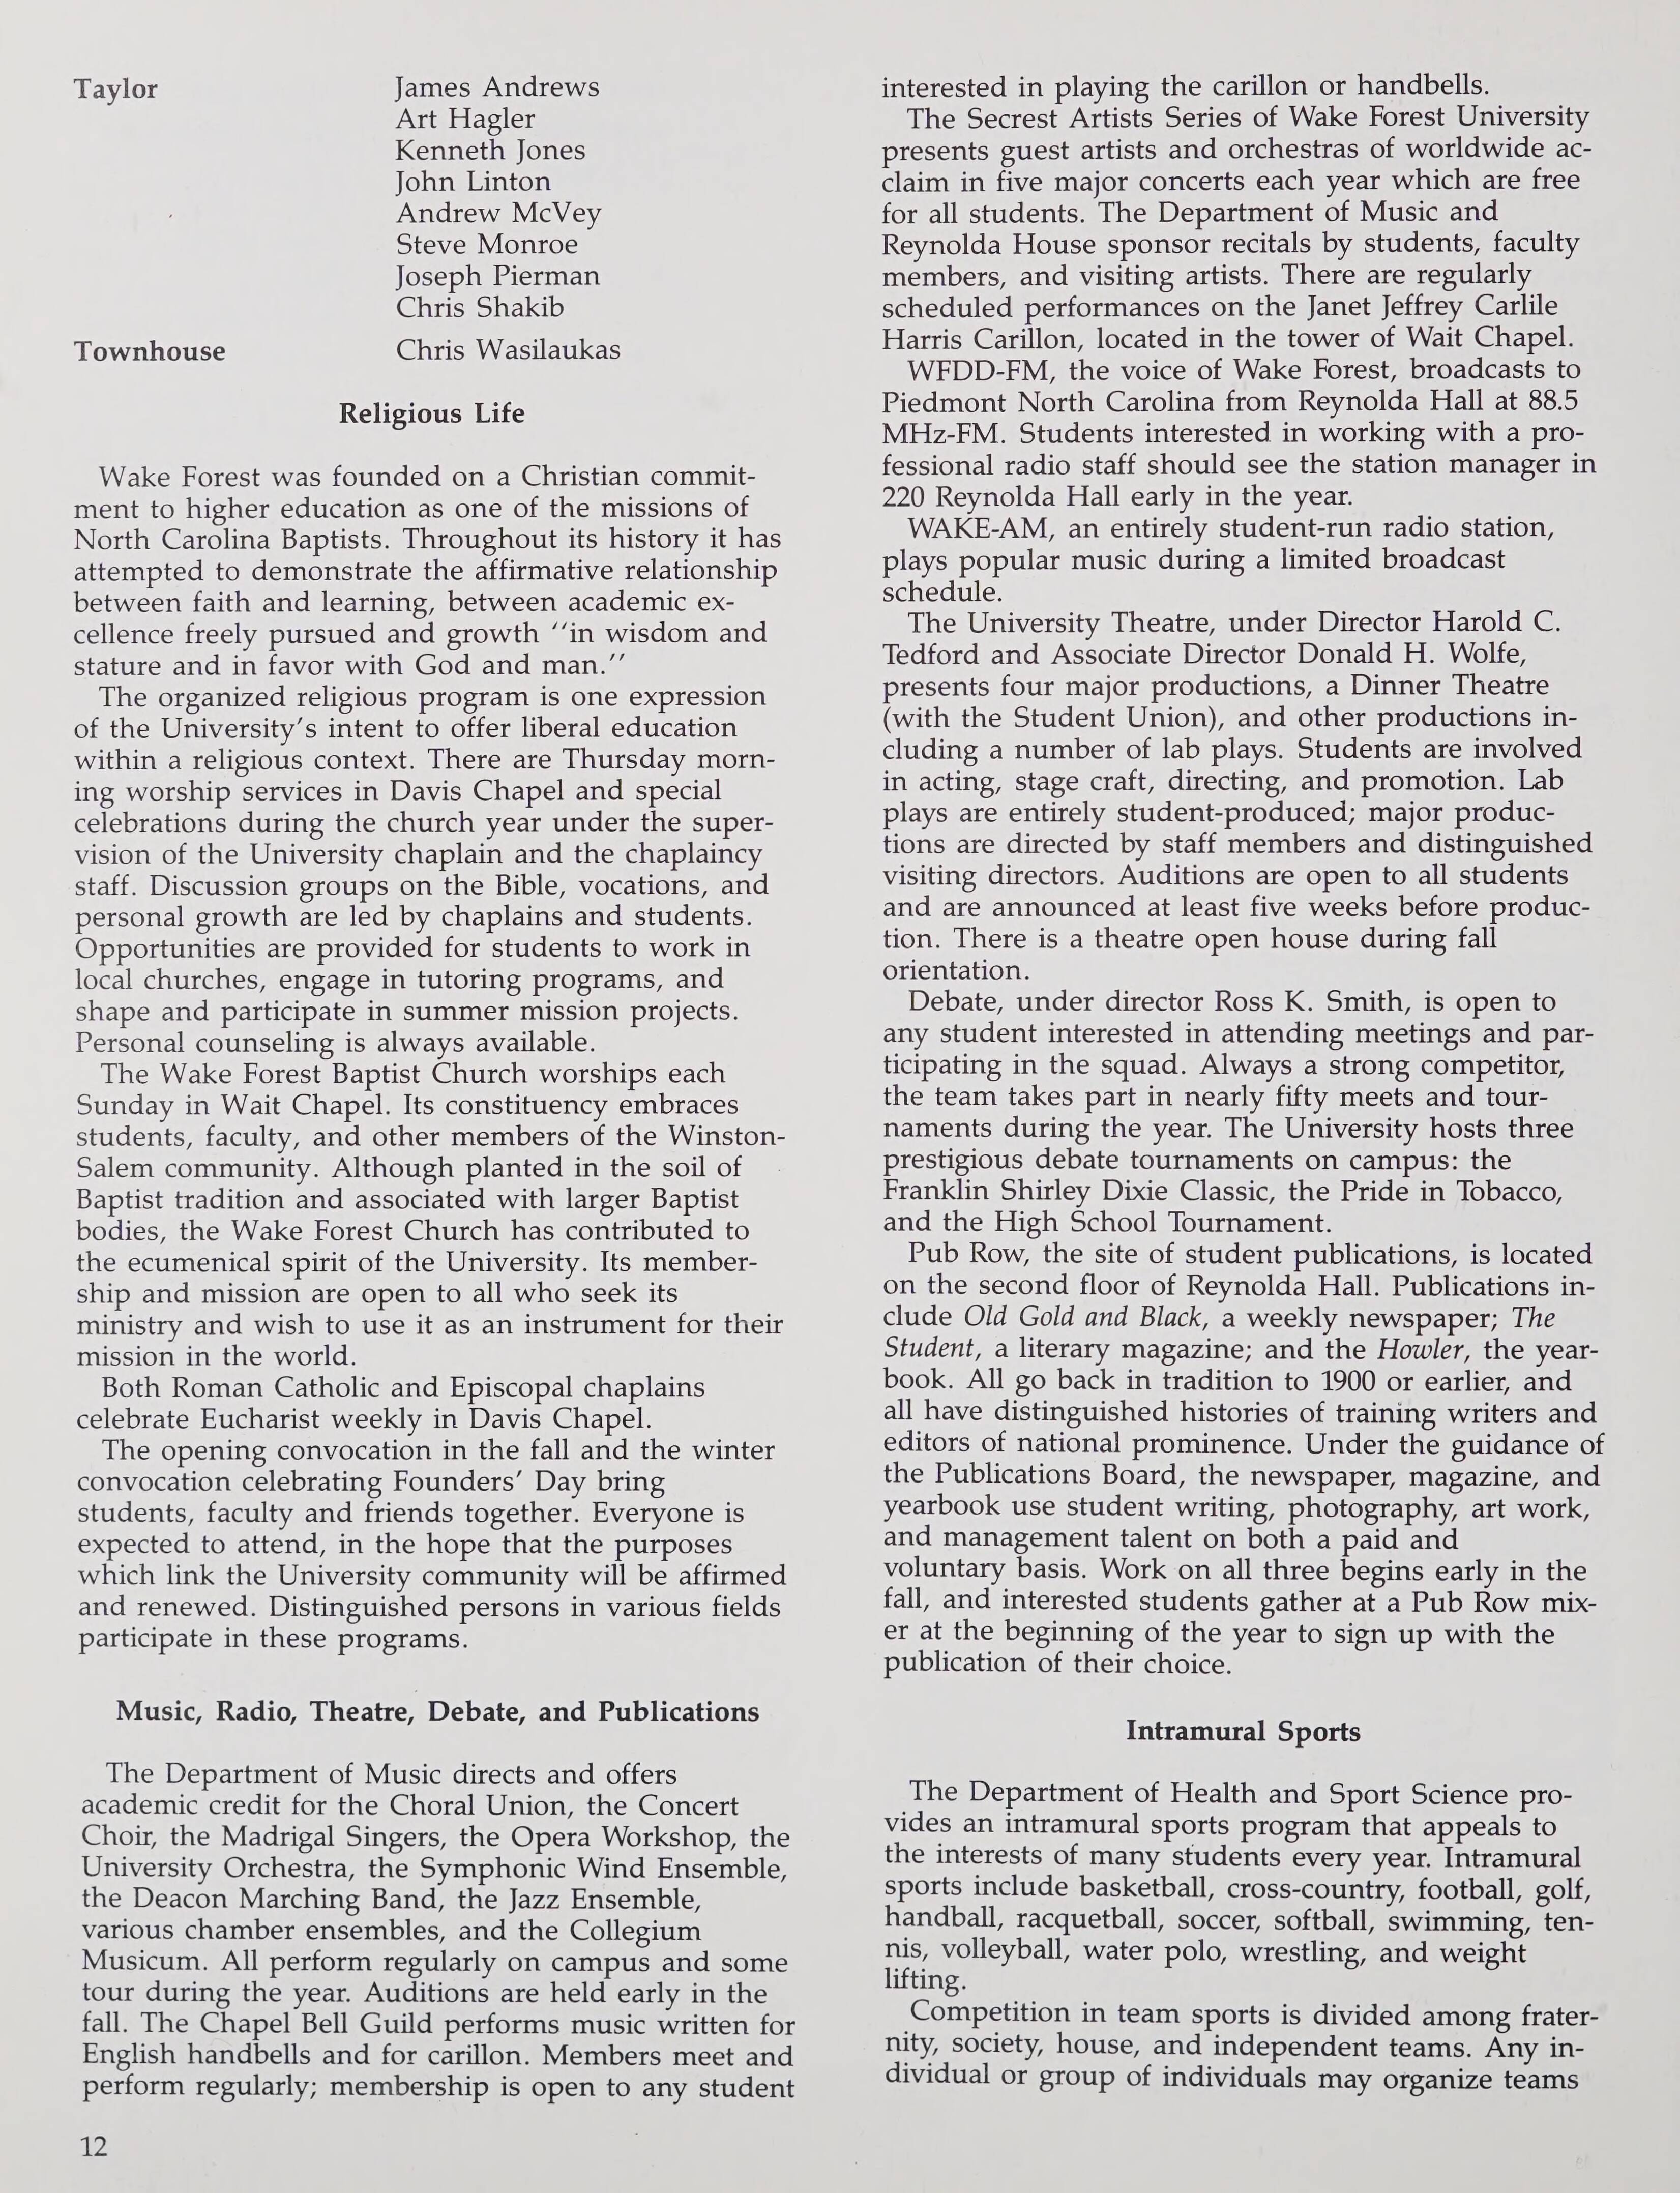 Wake Forest University Student Handbook [19881989]